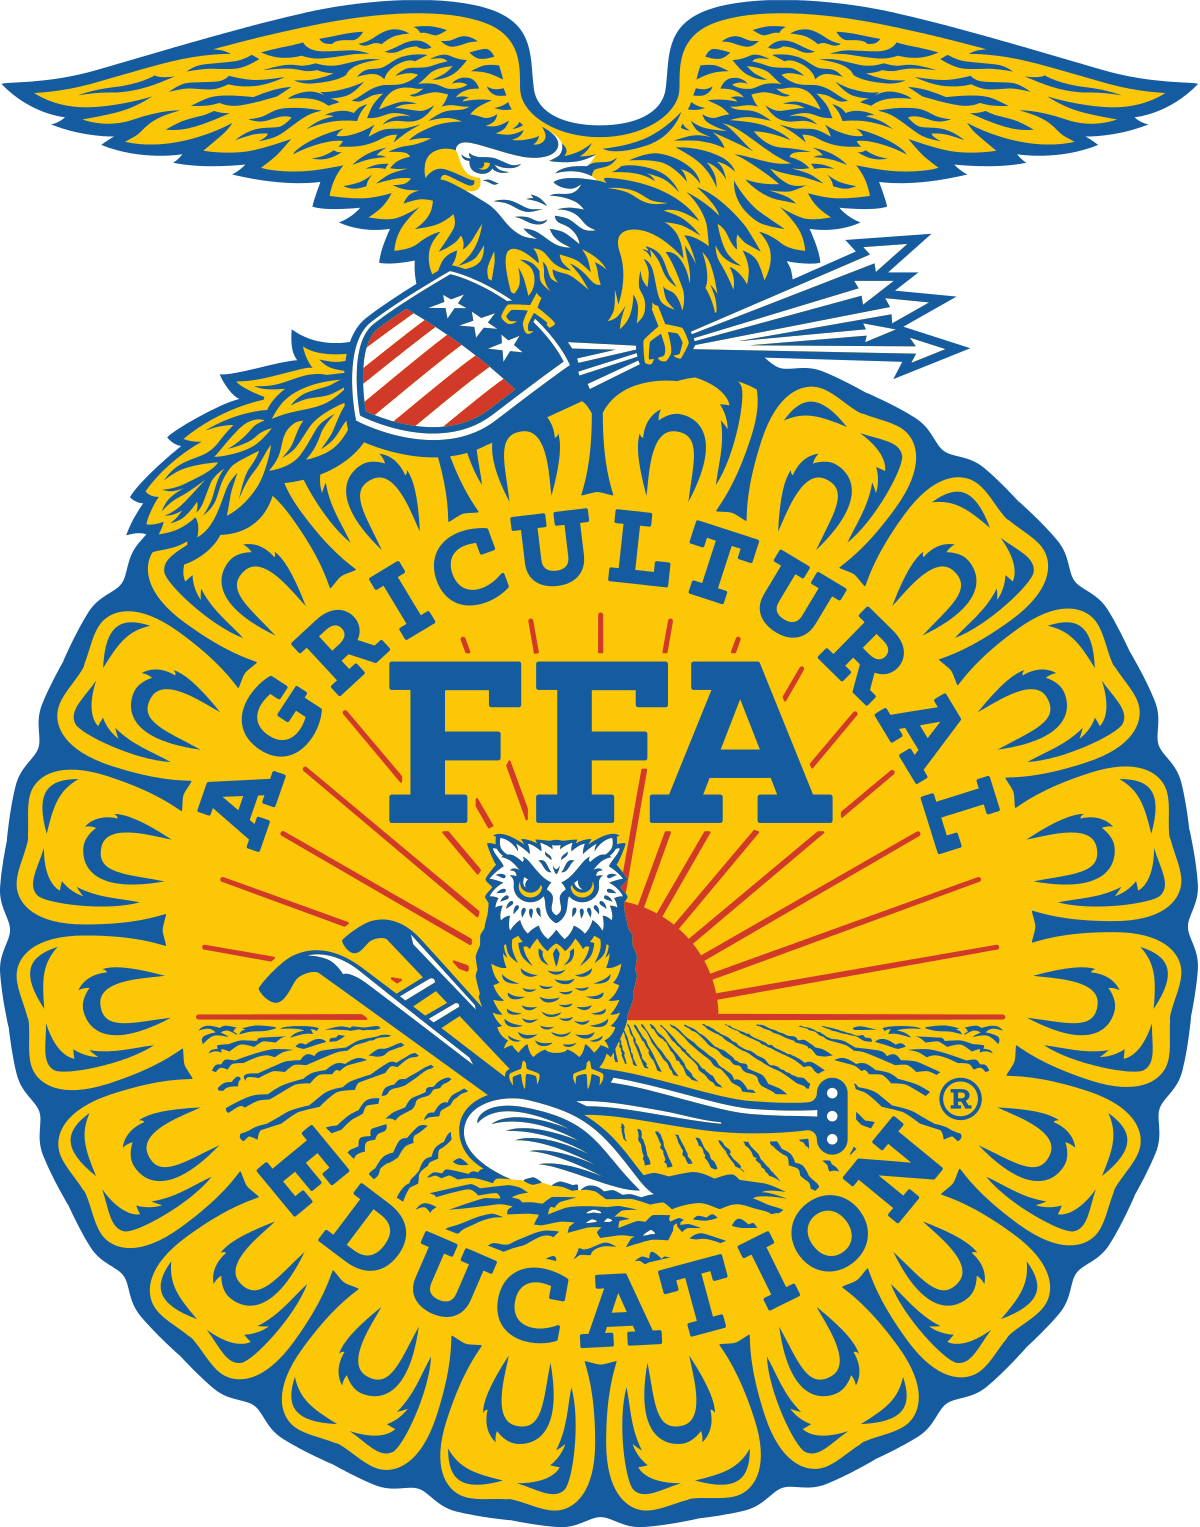 Greene County FFA Encourages Public Participation During National FFA